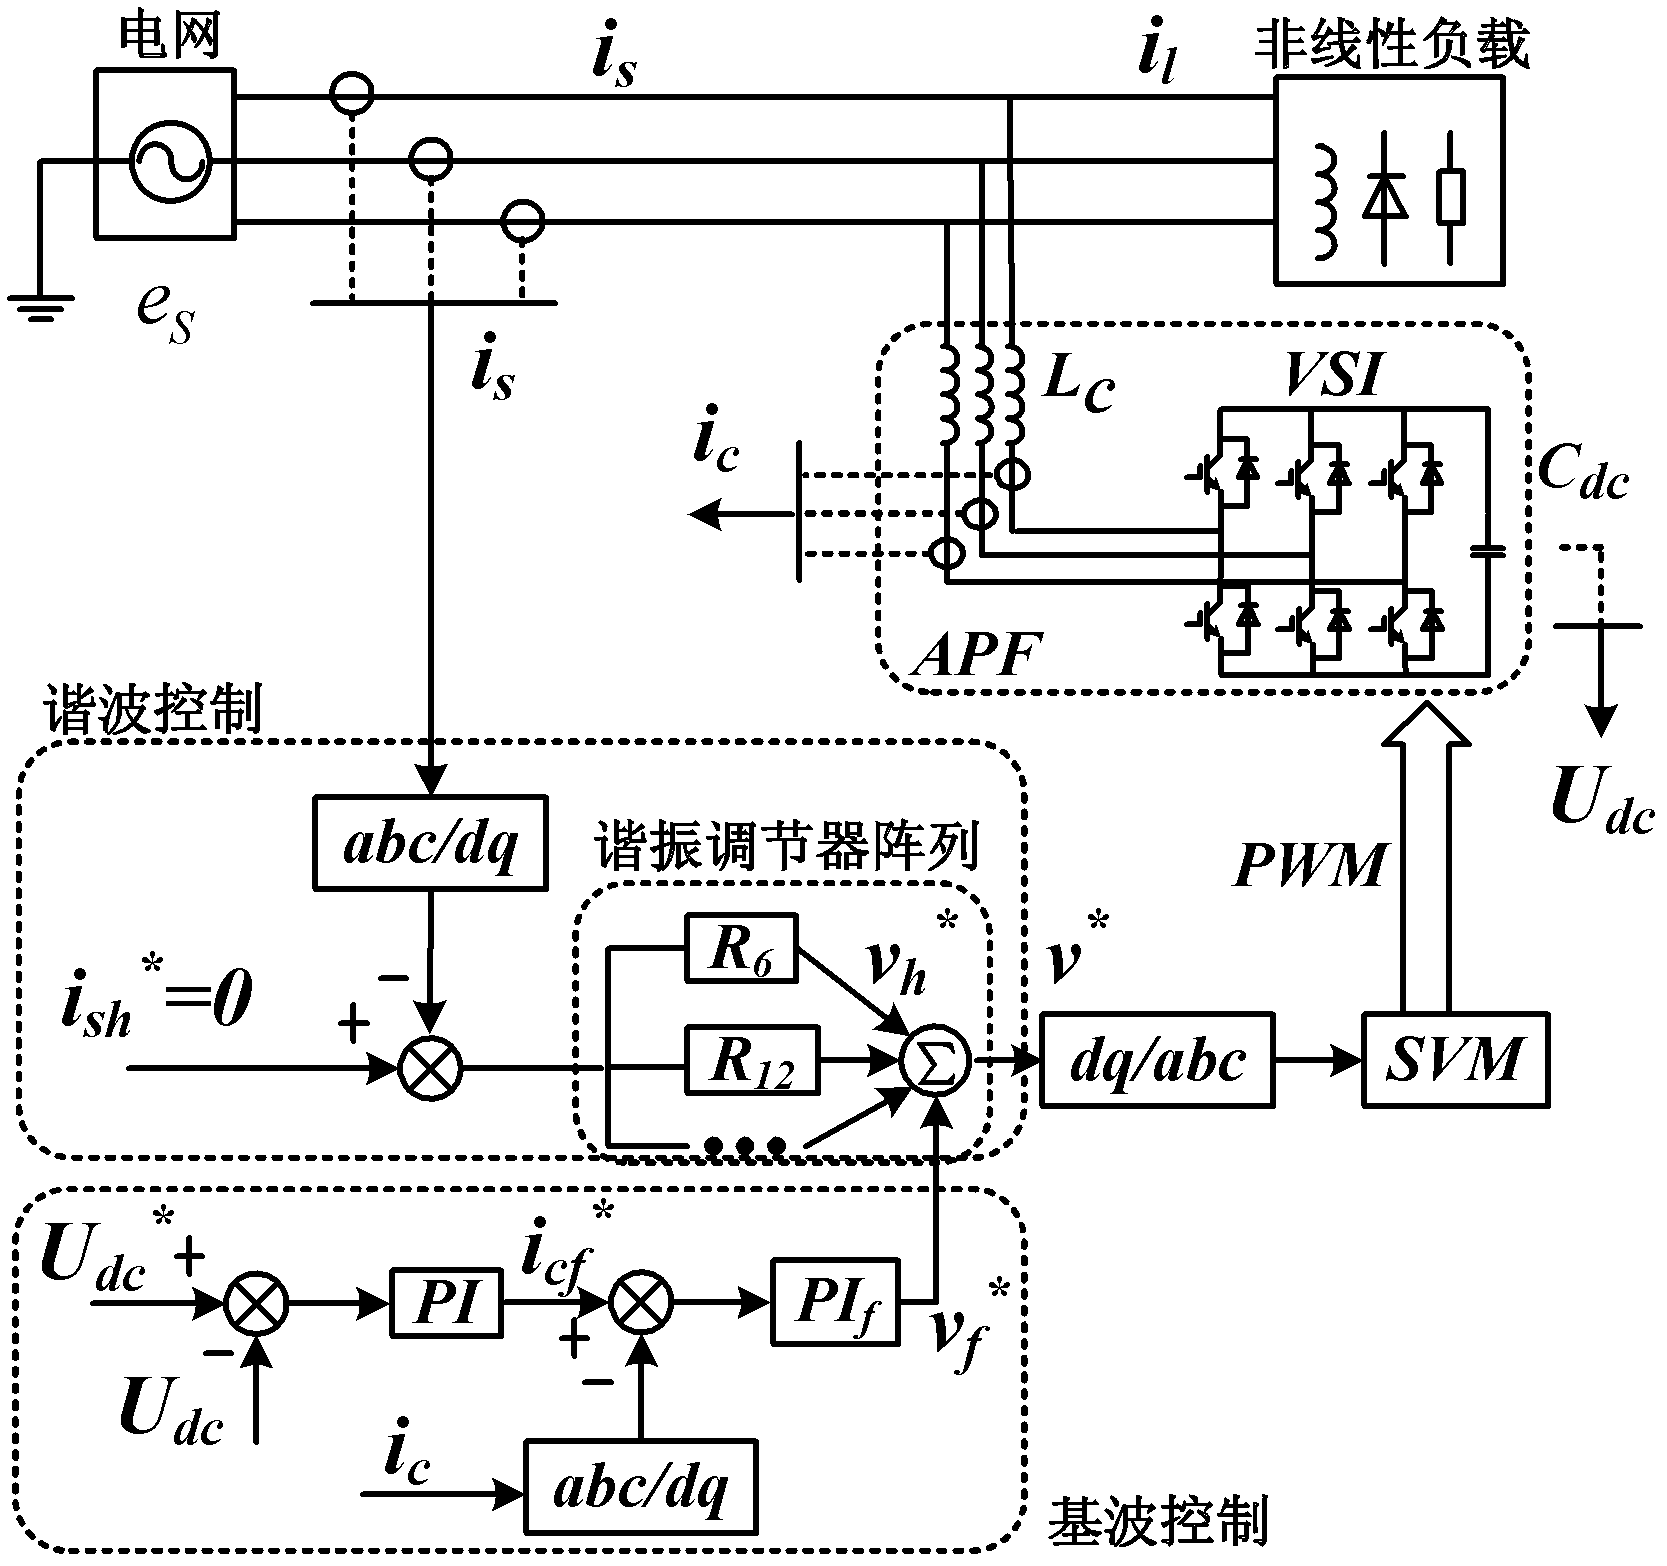 Active power filter closed loop control method based on decoupling resonance regulator array